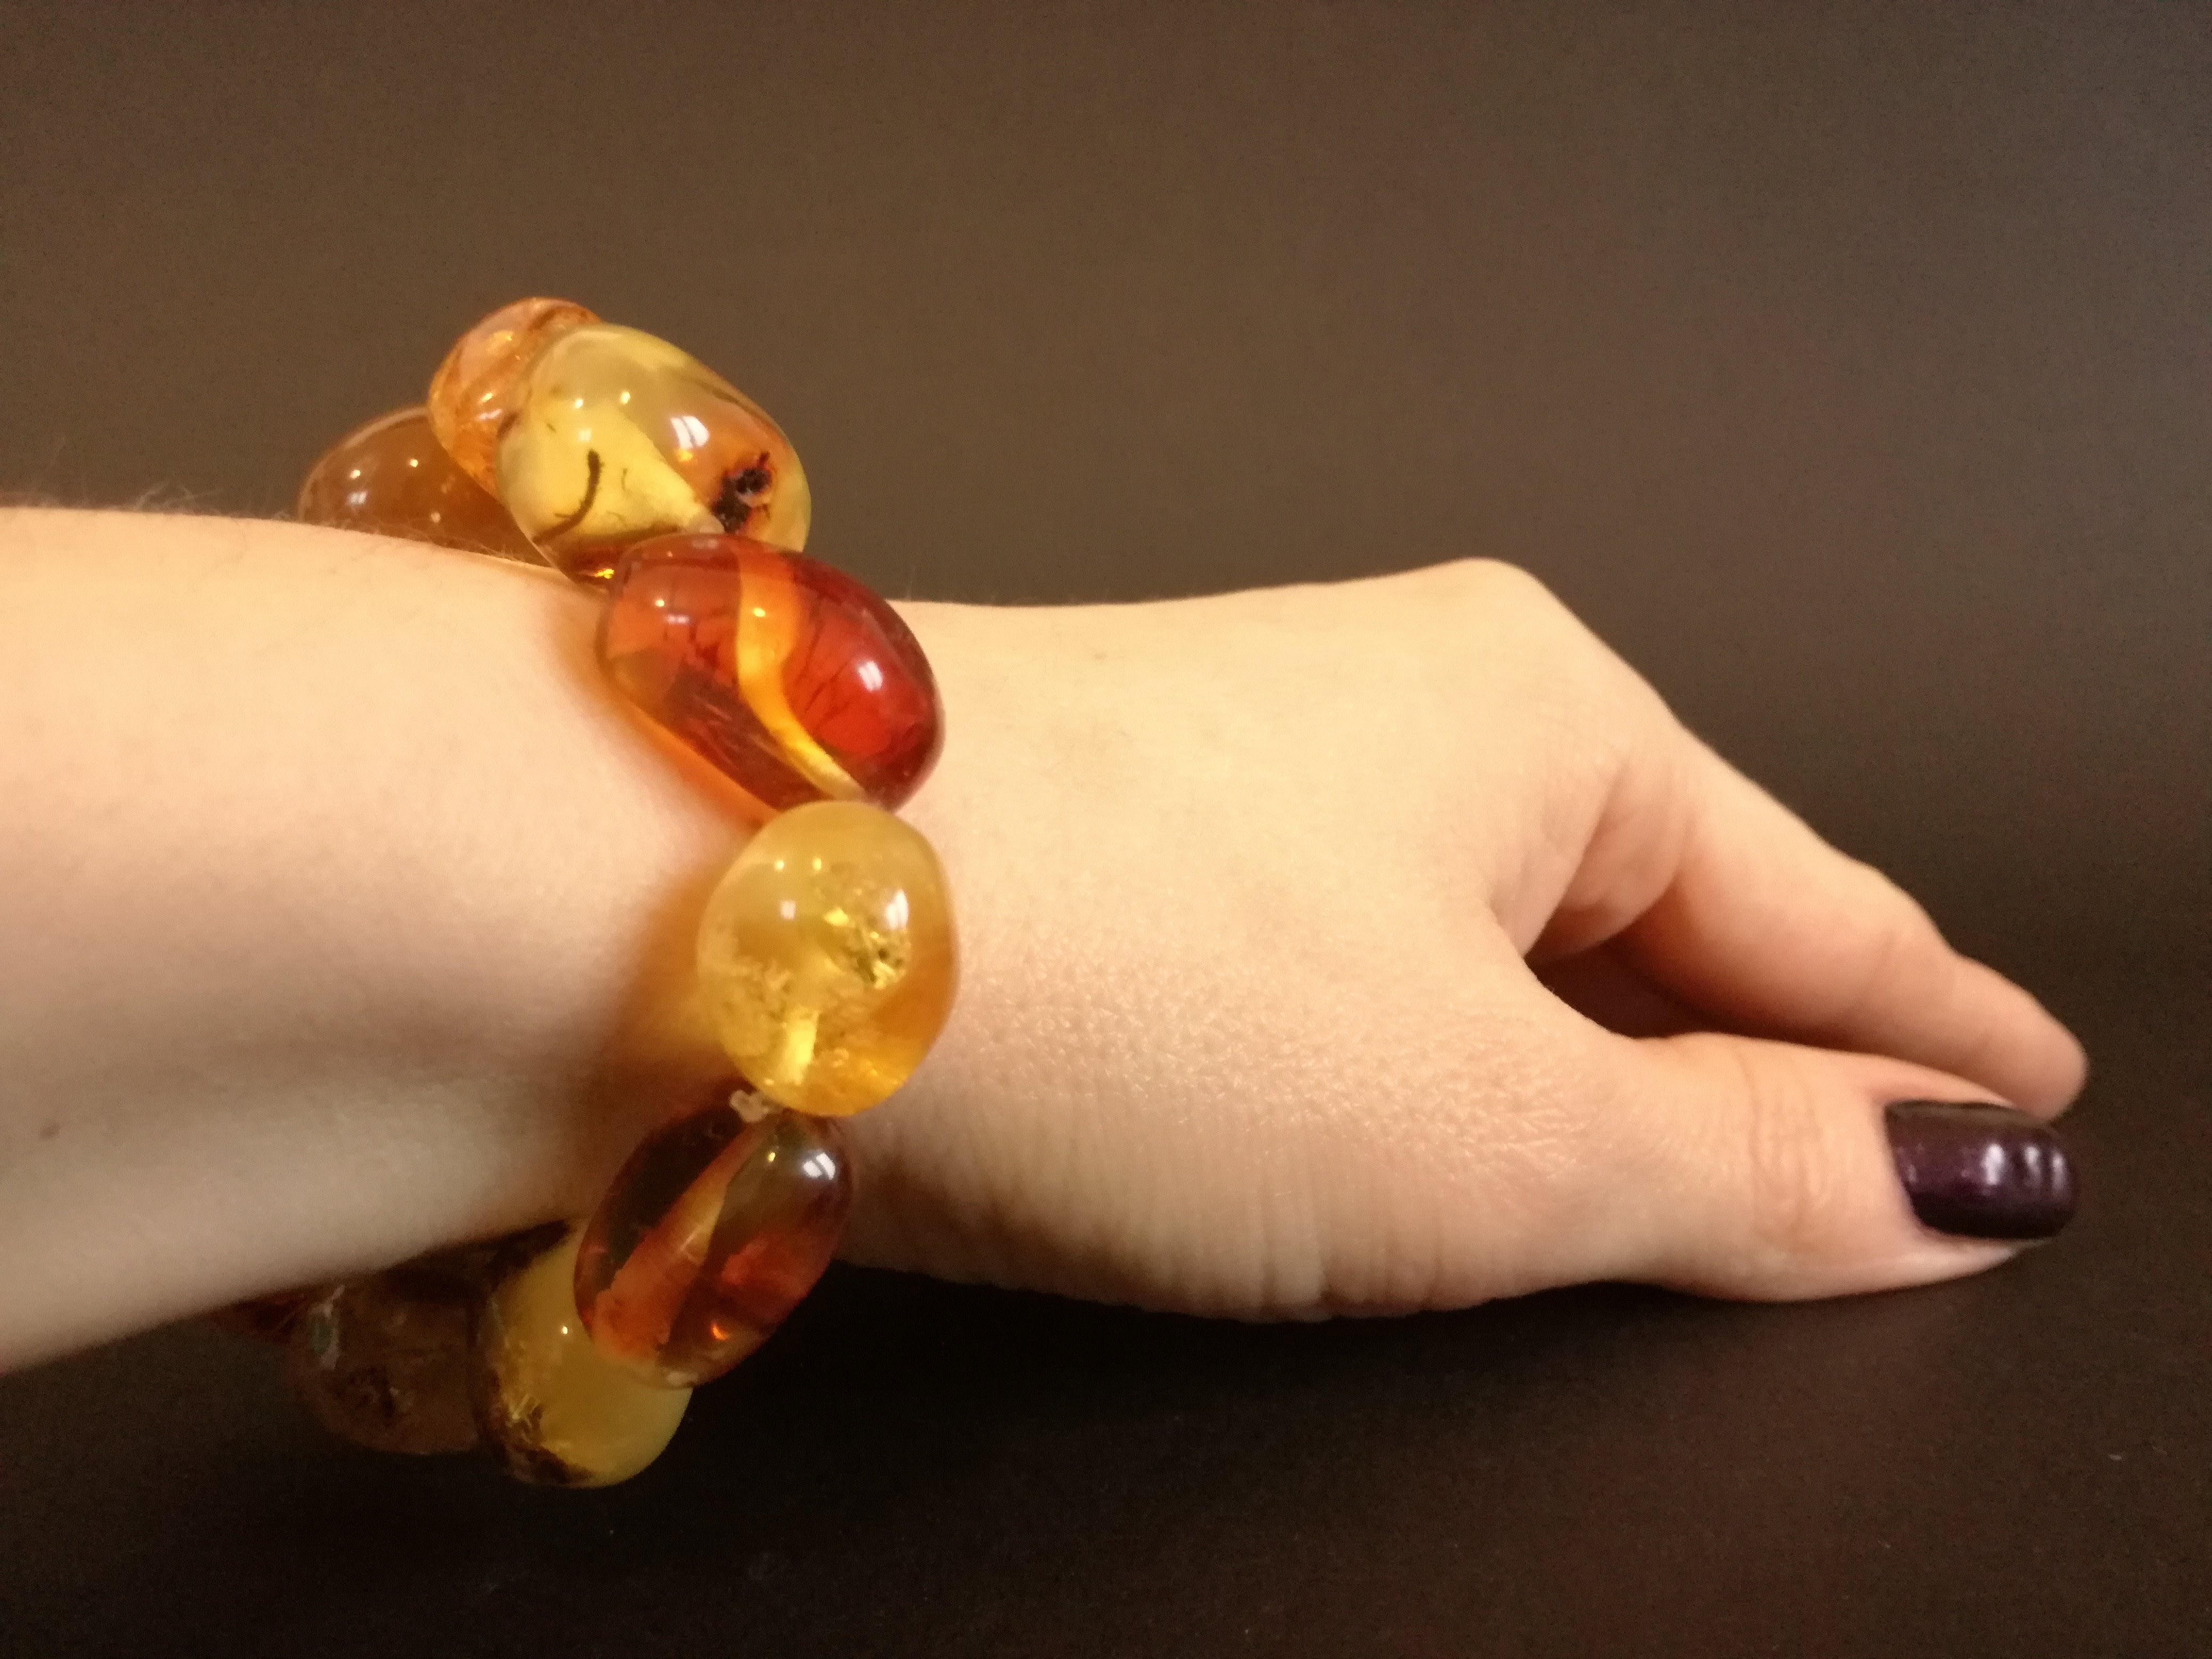 Genuine Handmade Amber Bracelet on Hand, Multicolor, medium Size, Small Faceted Beads, , For Her, Nursing Mums